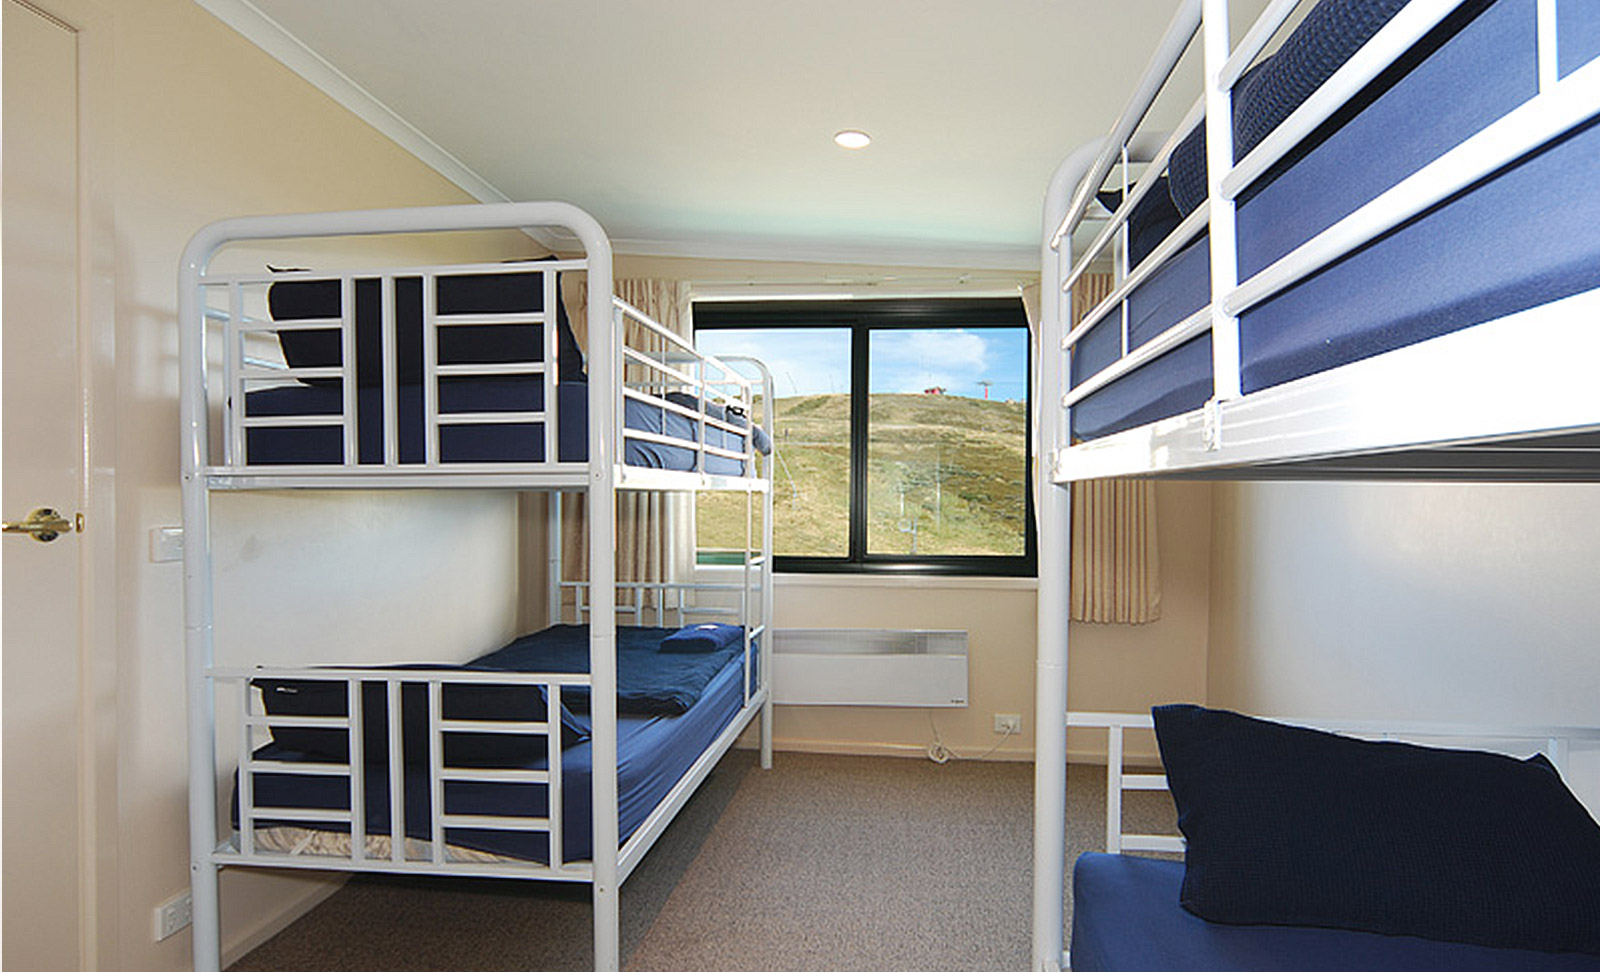 Arlberg Hotel Mt Buller - Accommodation Tasmania 4